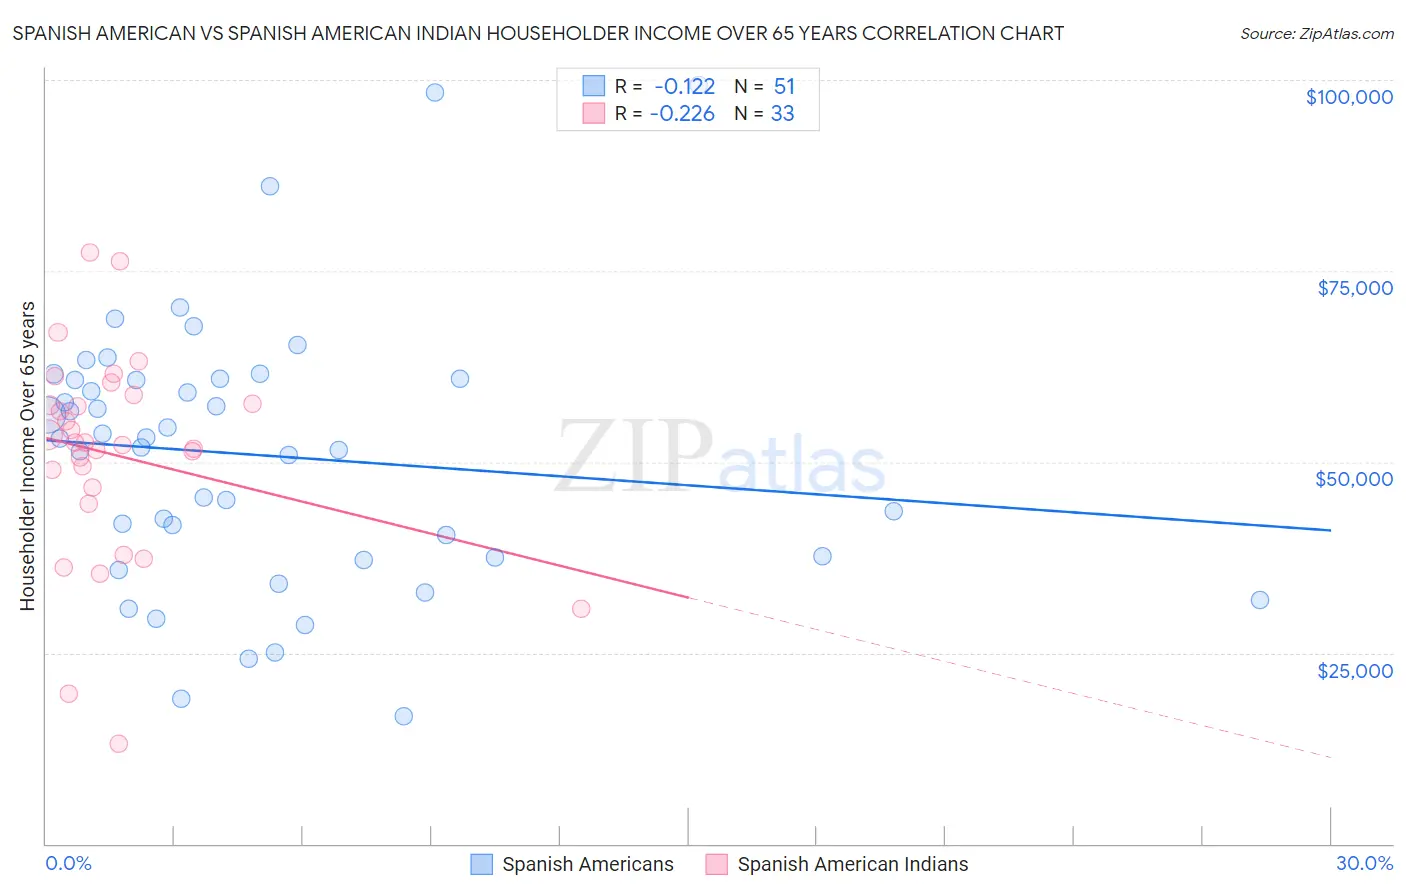 Spanish American vs Spanish American Indian Householder Income Over 65 years